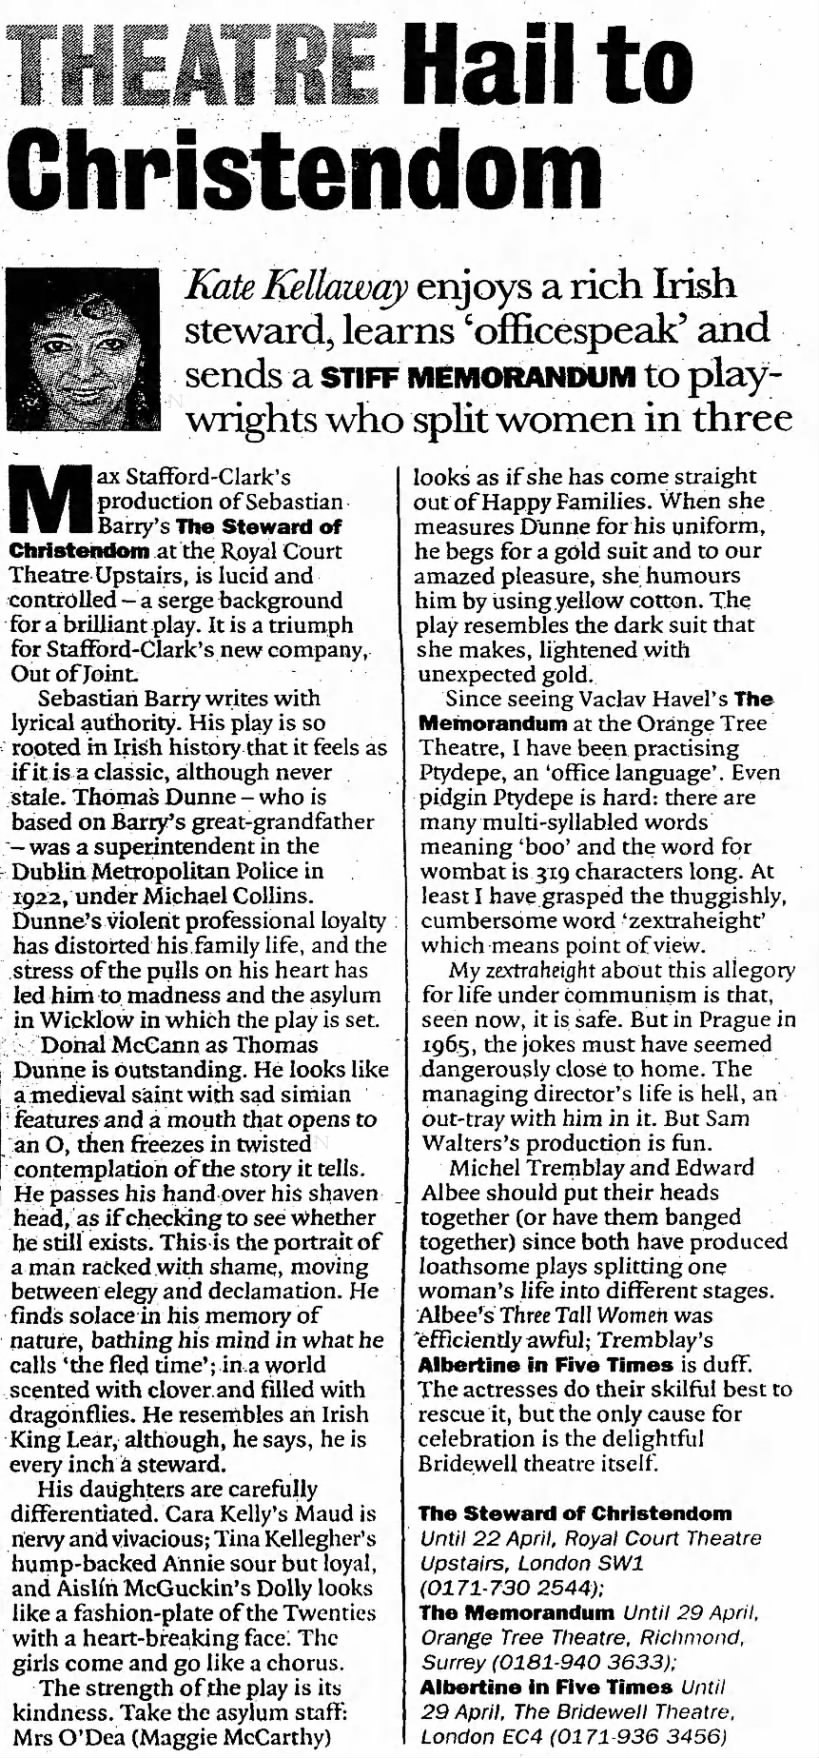 Kate Kellaway's review, Observer, 9 April 1995